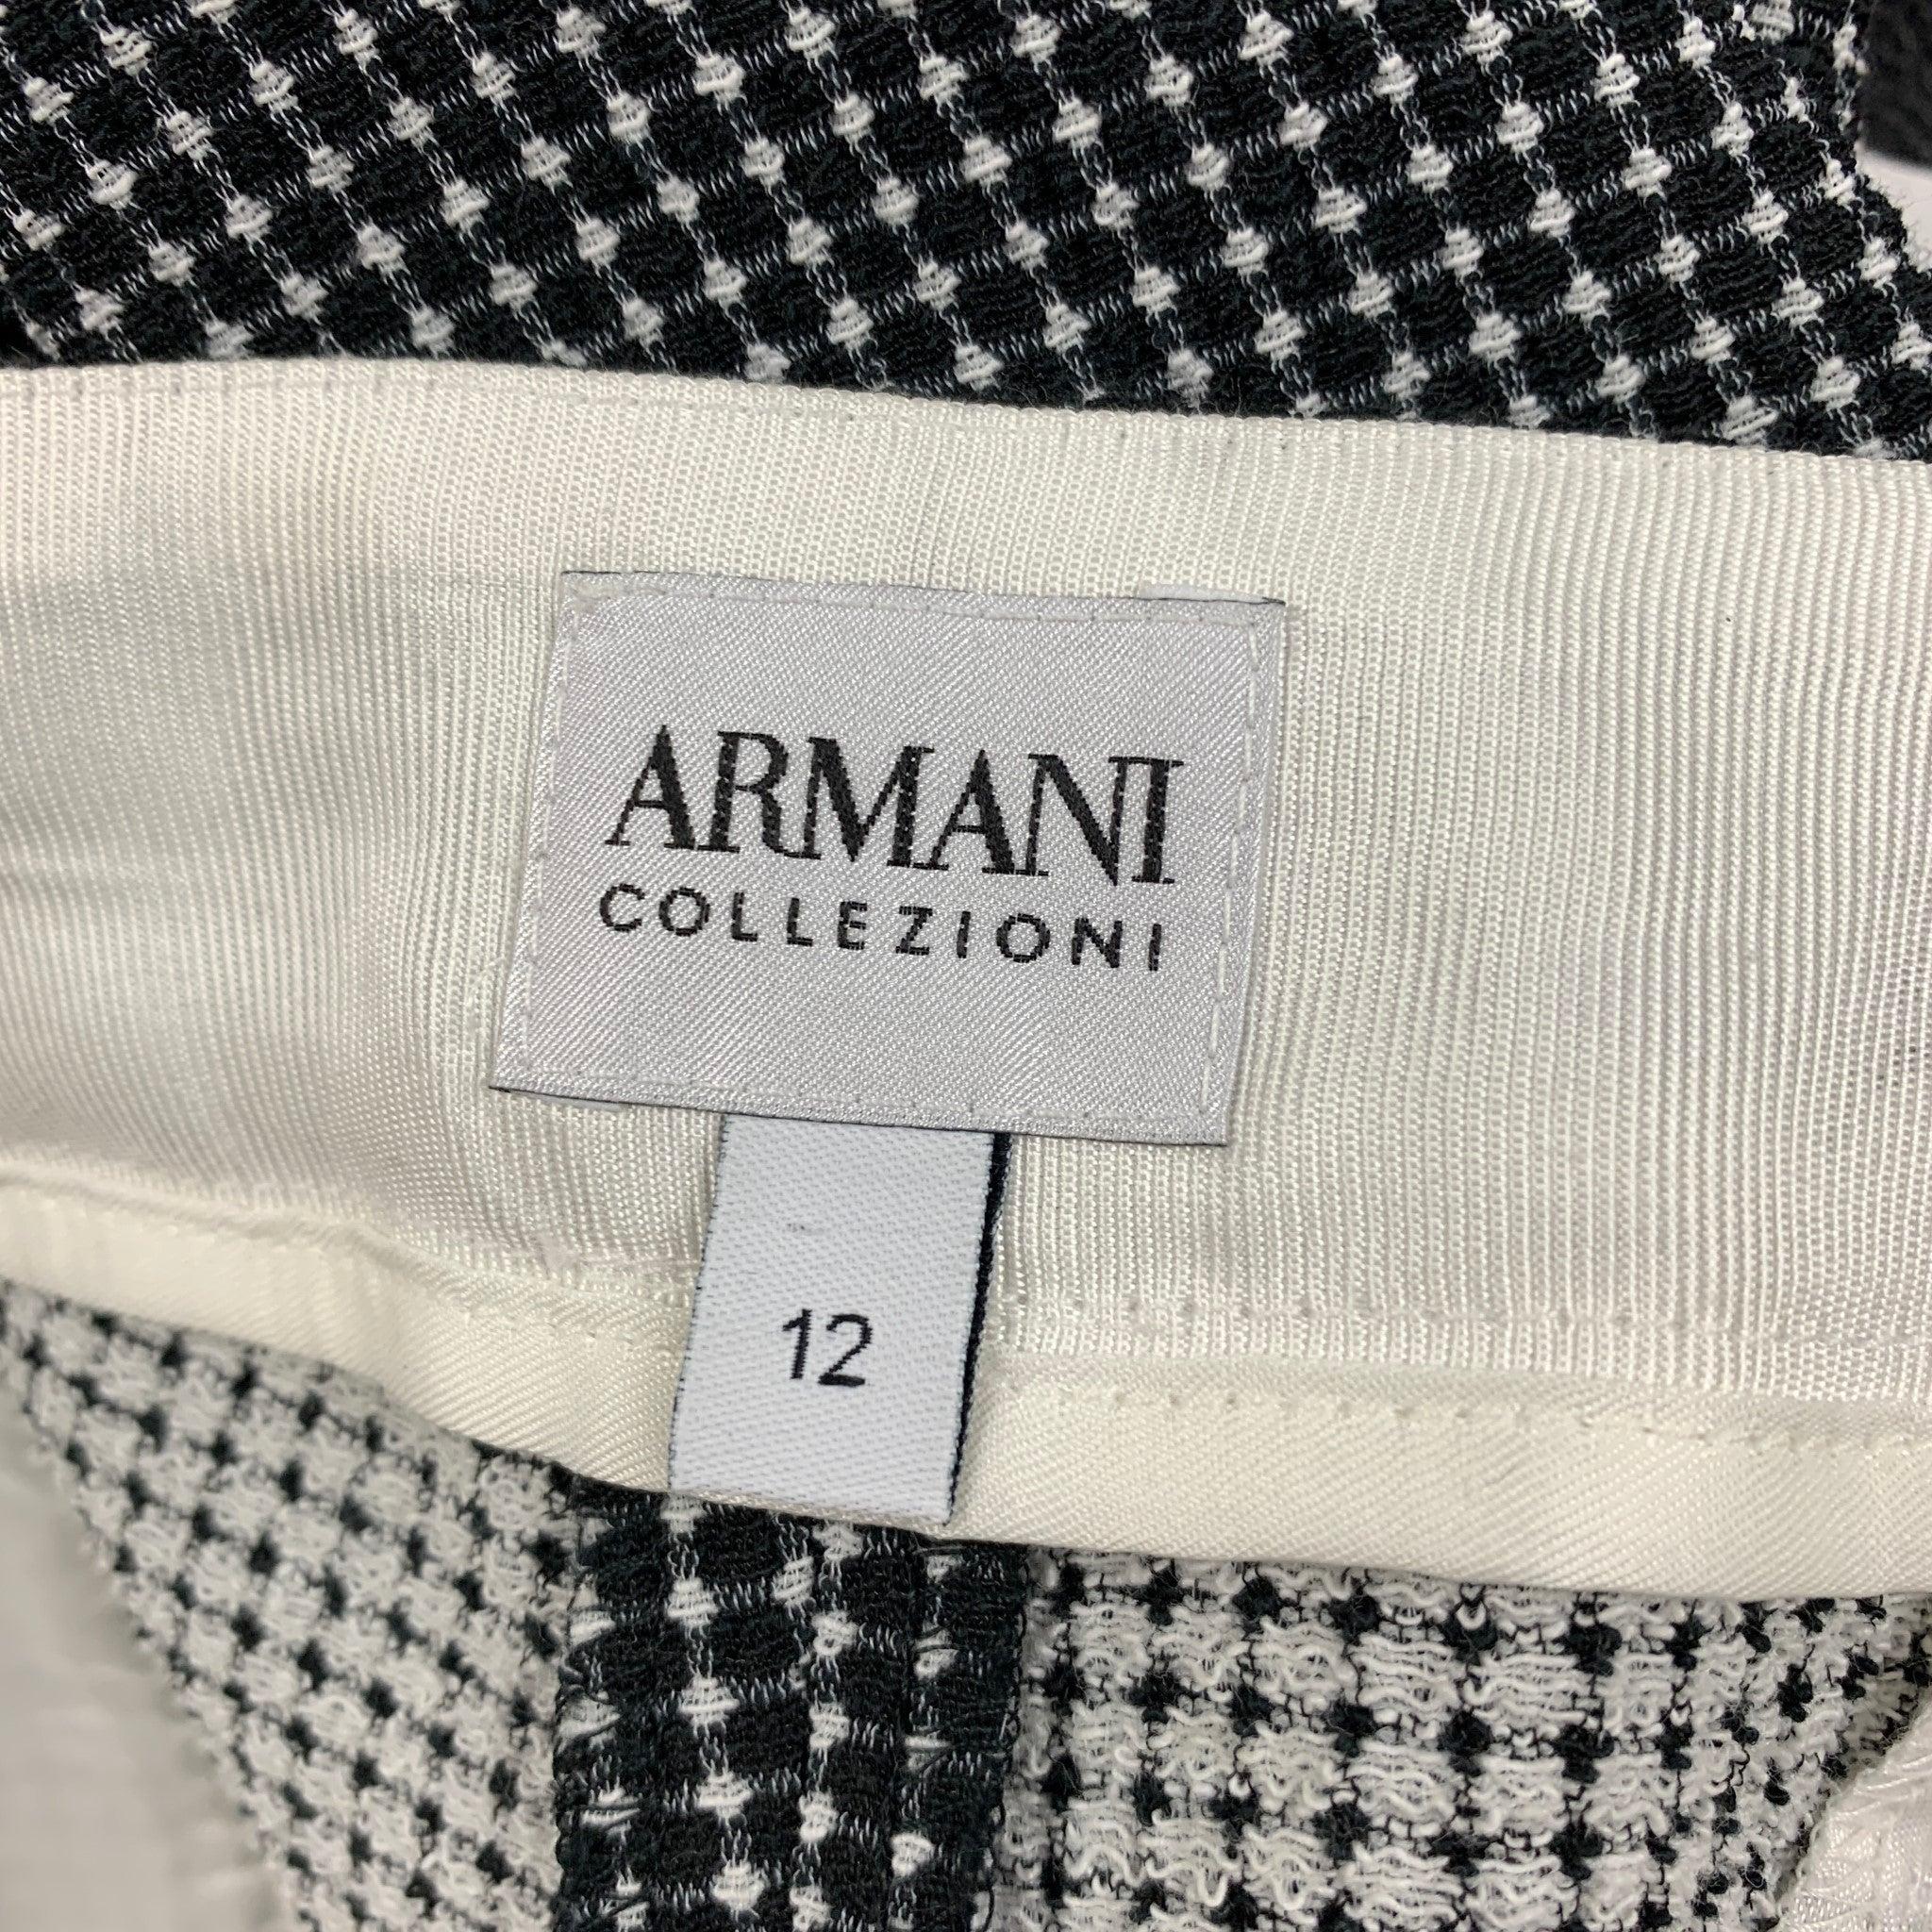 ARMANI COLLEZIONI Size 12 Black & White Cotton Blend Checkered Dress Pants For Sale 1